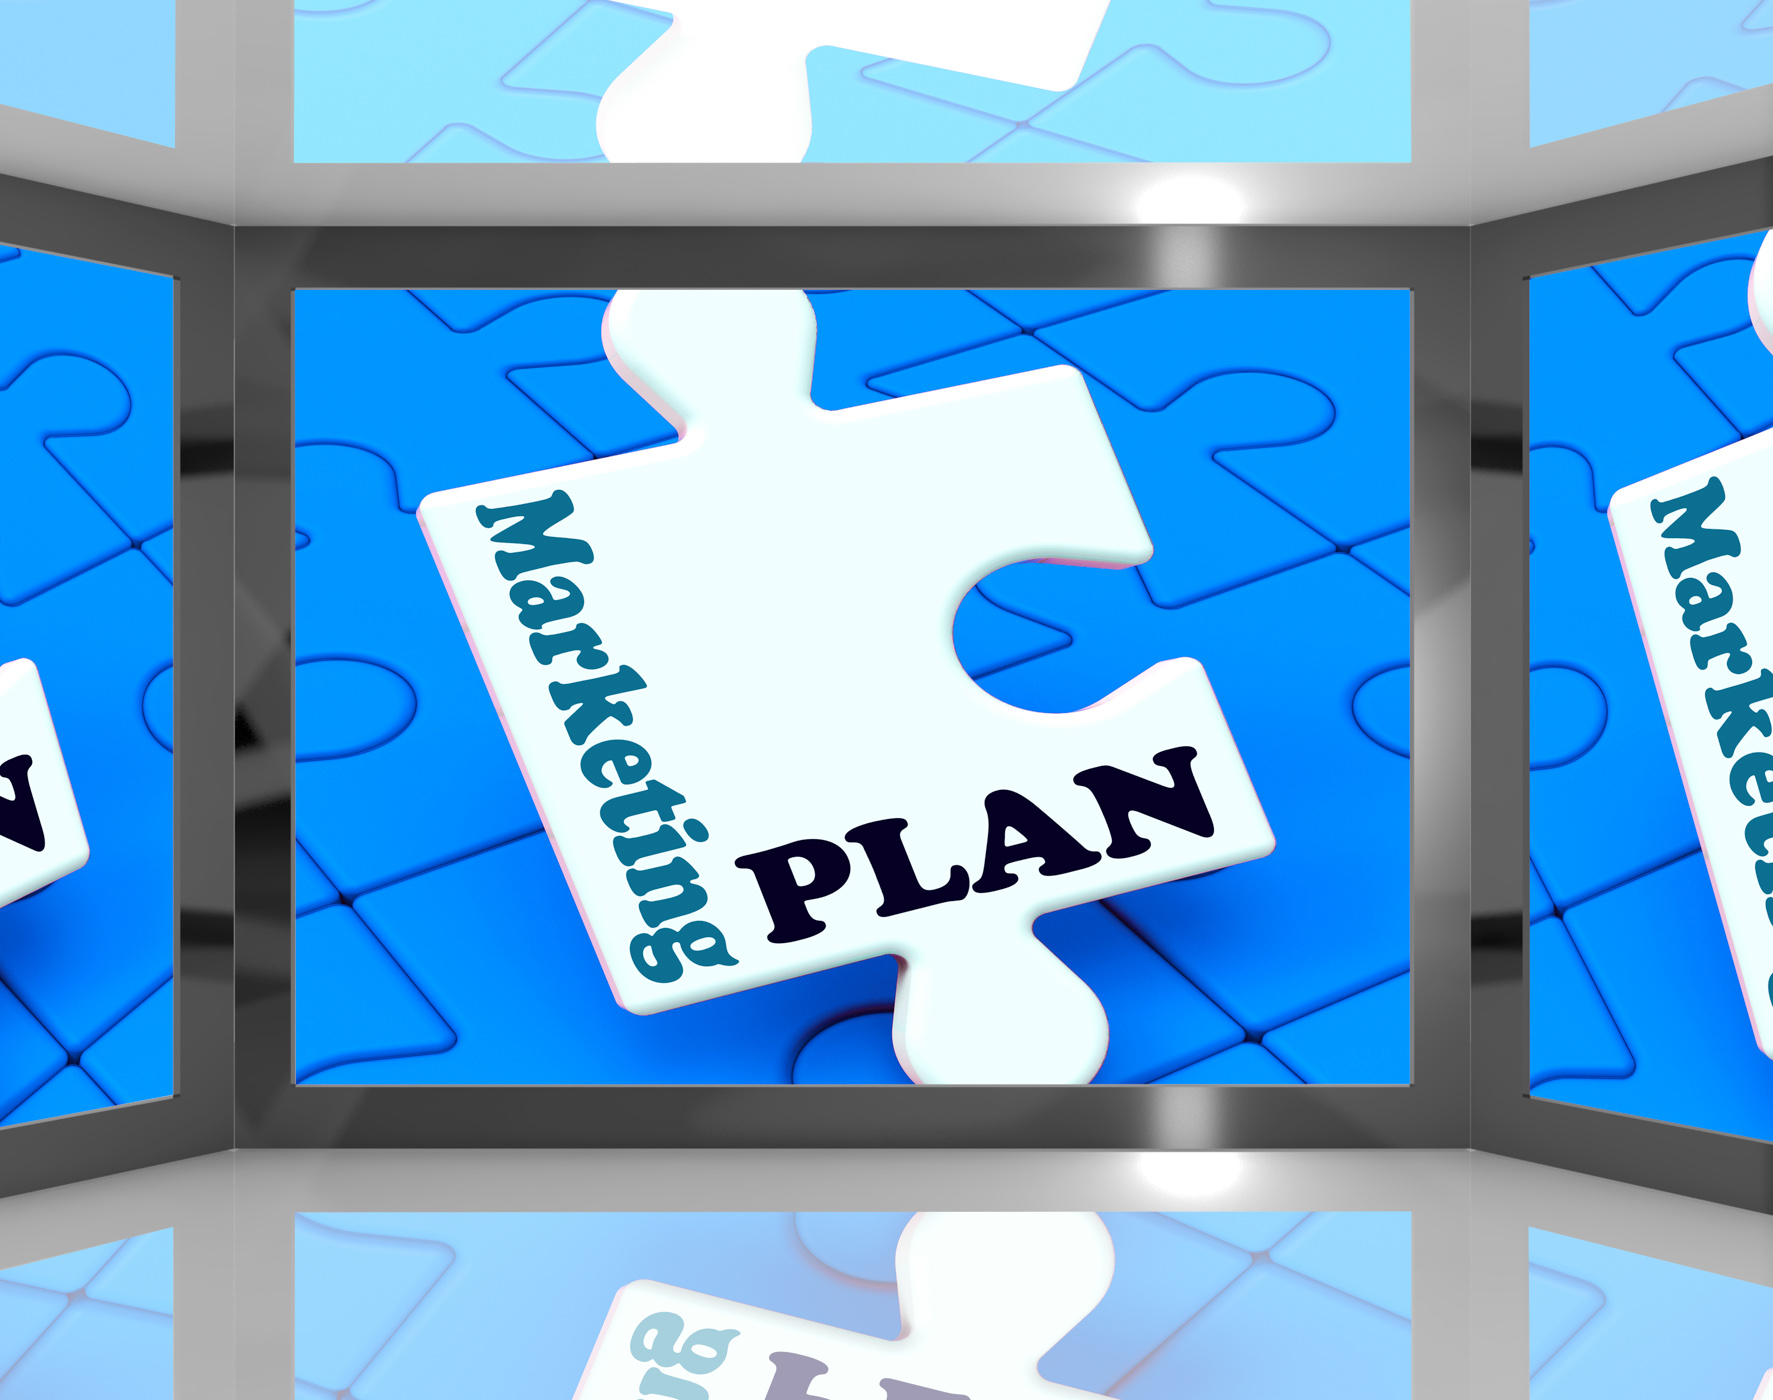 Marketing plan on screen shows marketing strategies photo